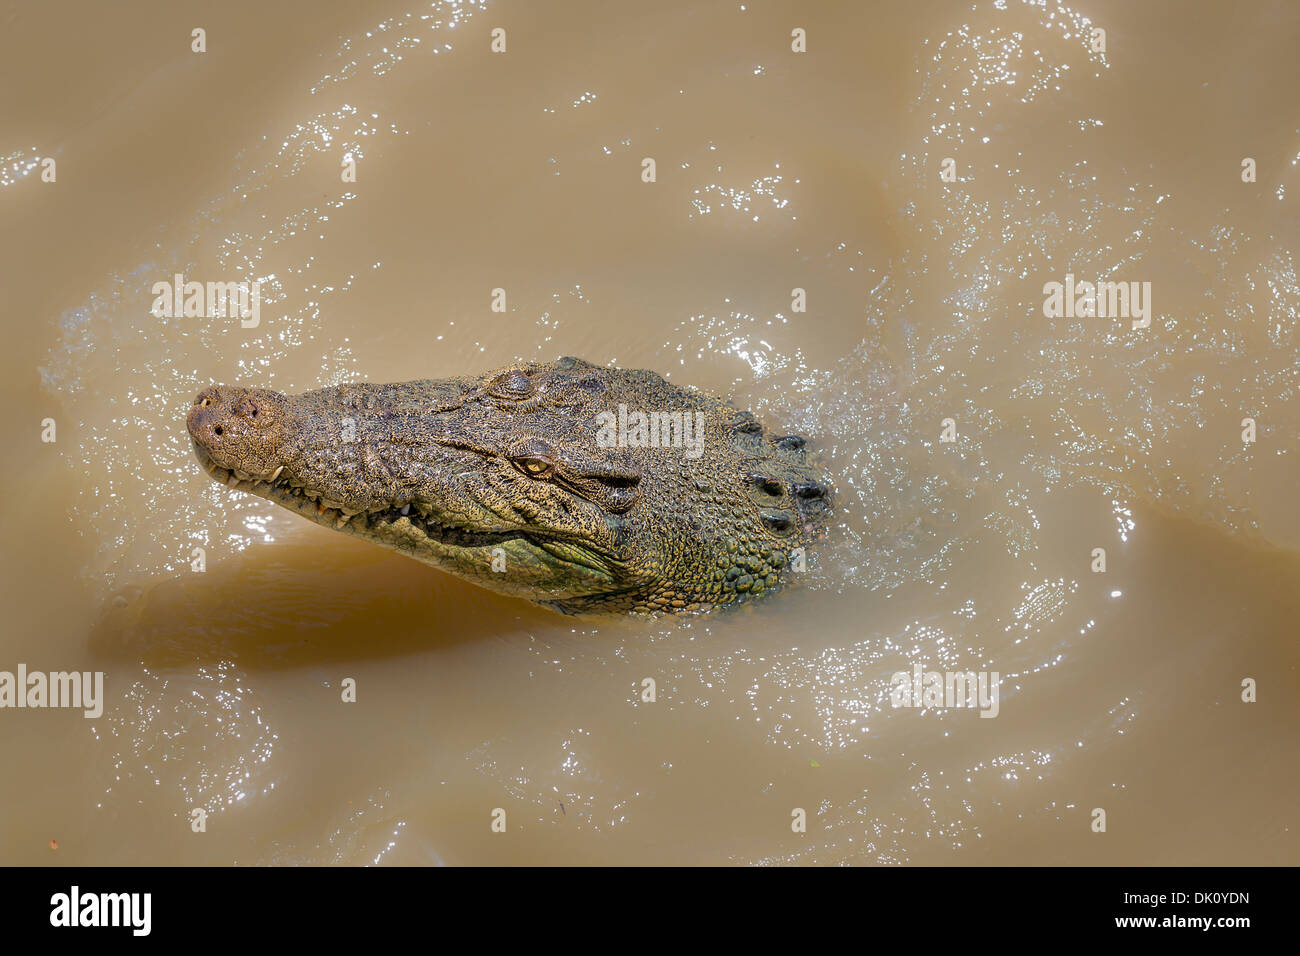 Saltwater crocodile (Crocodylus porosus) in the water, Australia Stock Photo